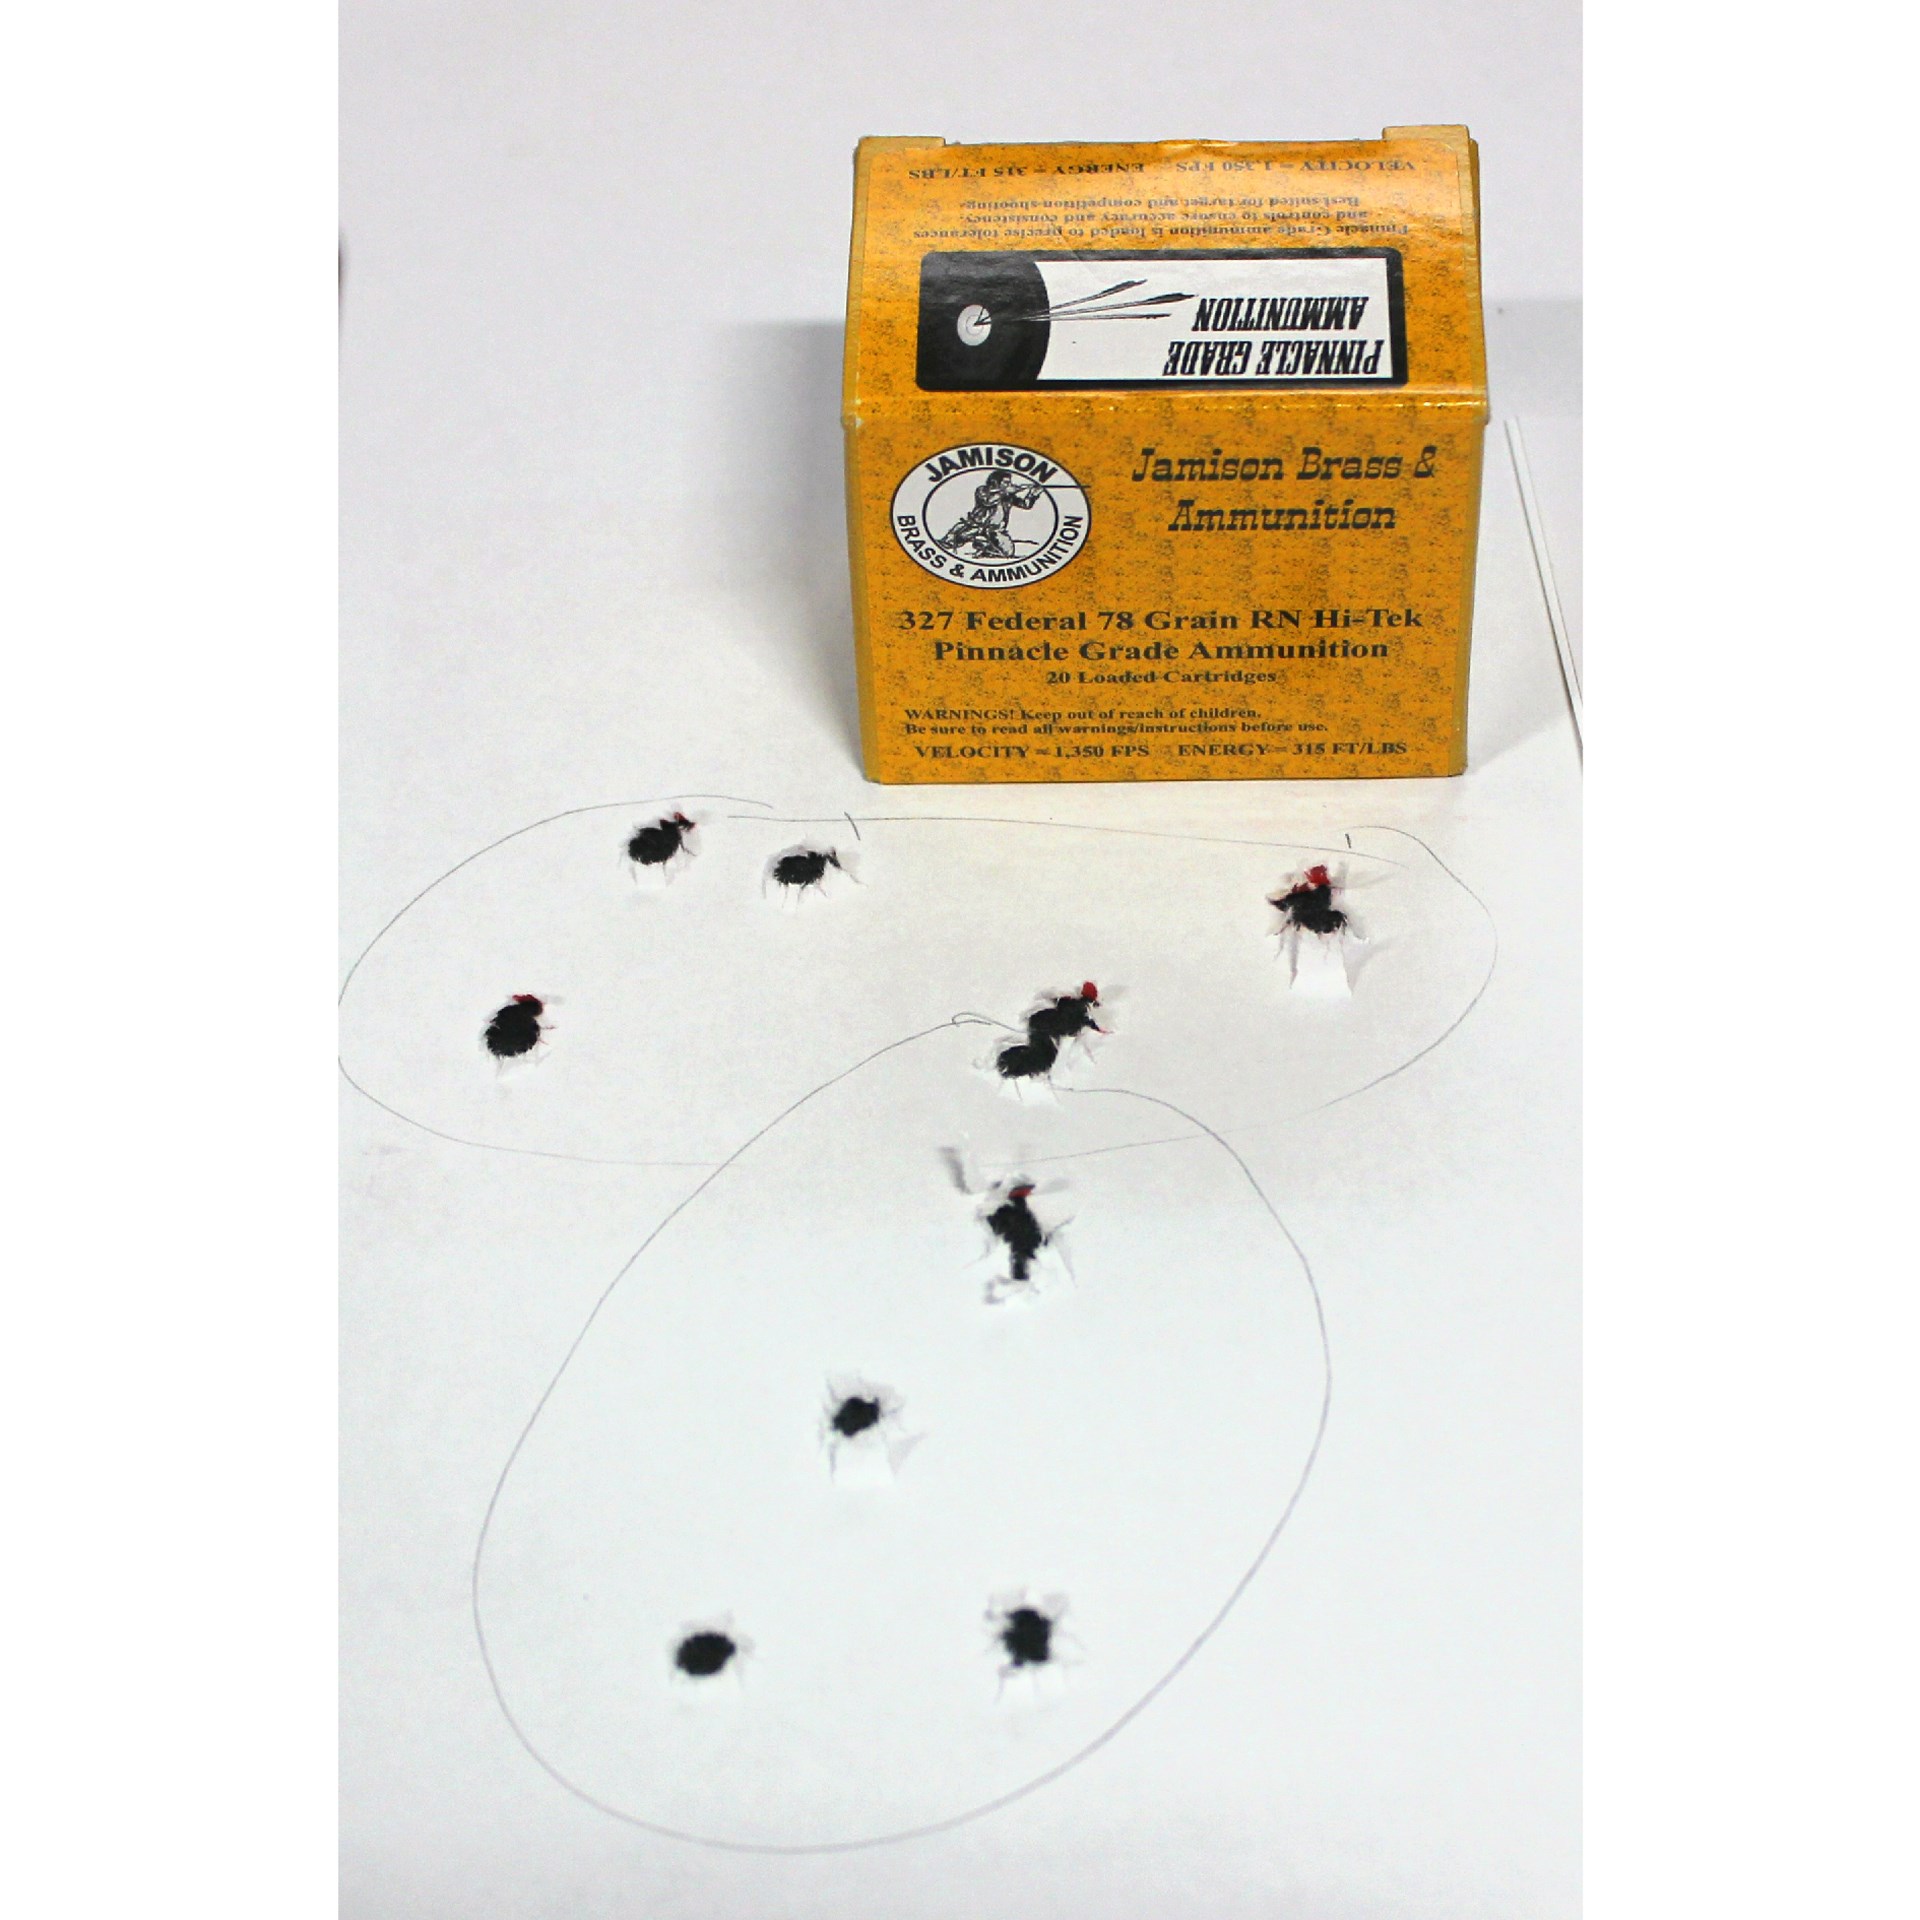 Paper target holes group accuracy bond arms custom build horman jamison ammunition box